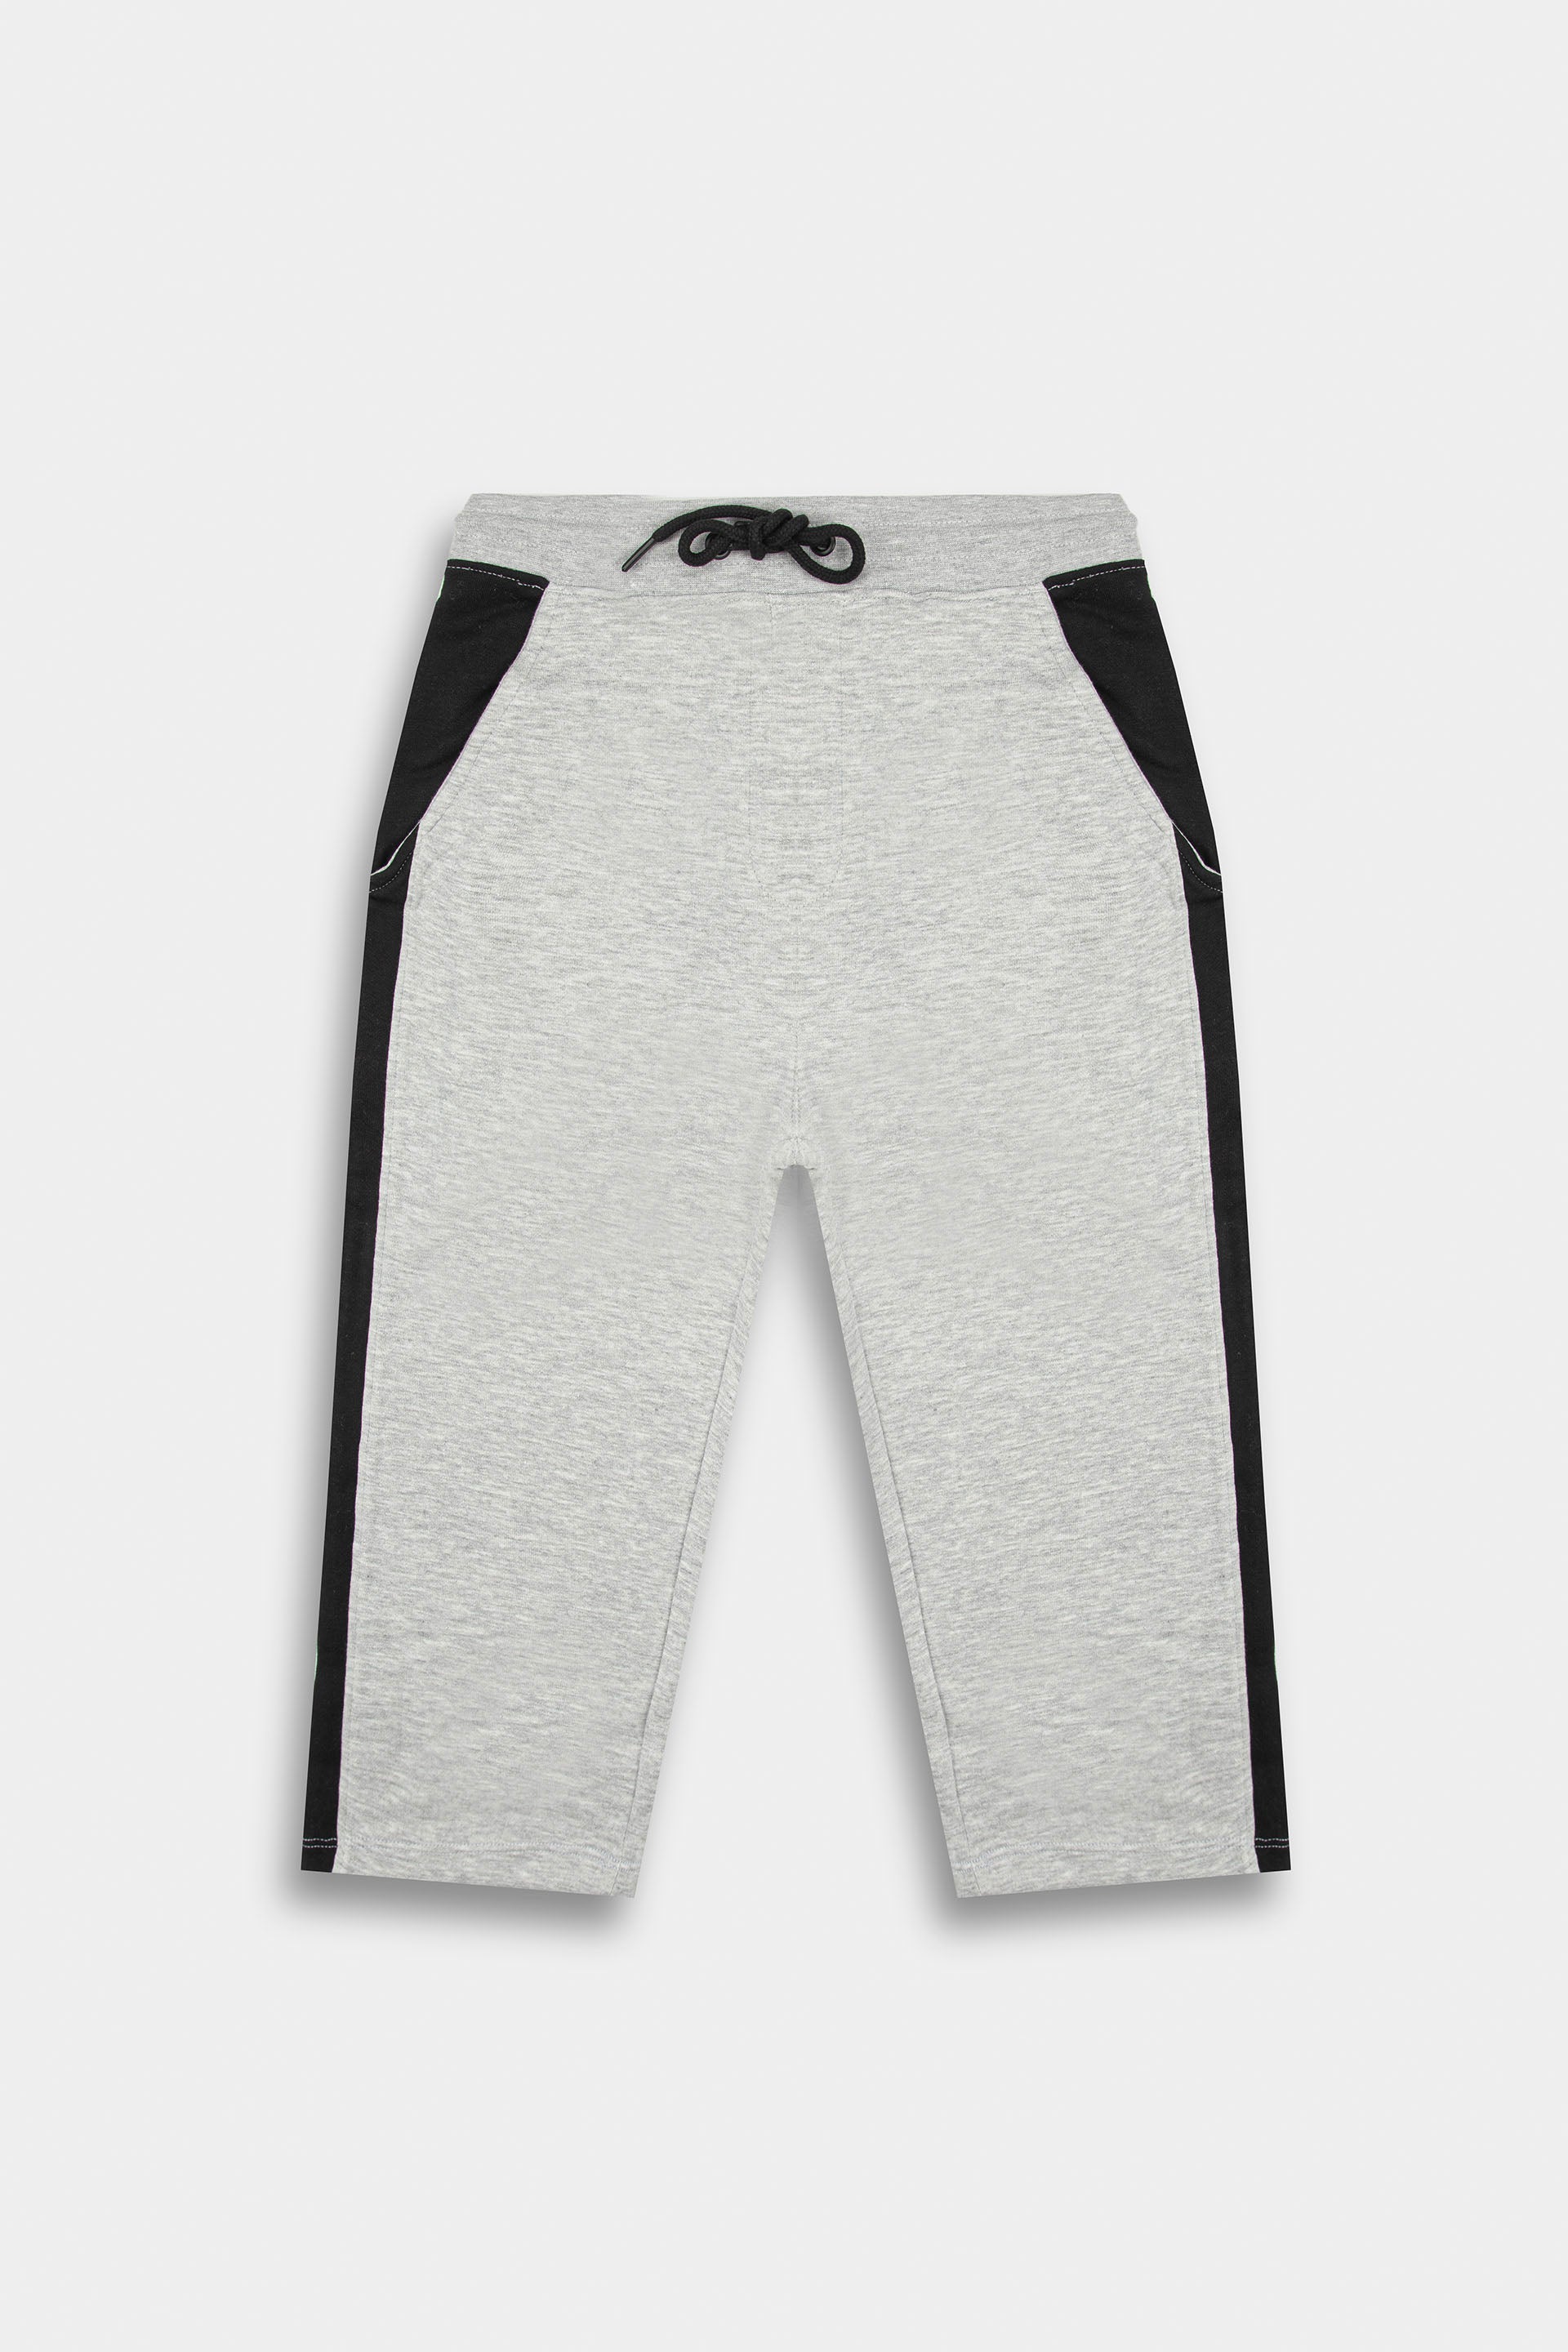 3-Quarter Shorts Grey